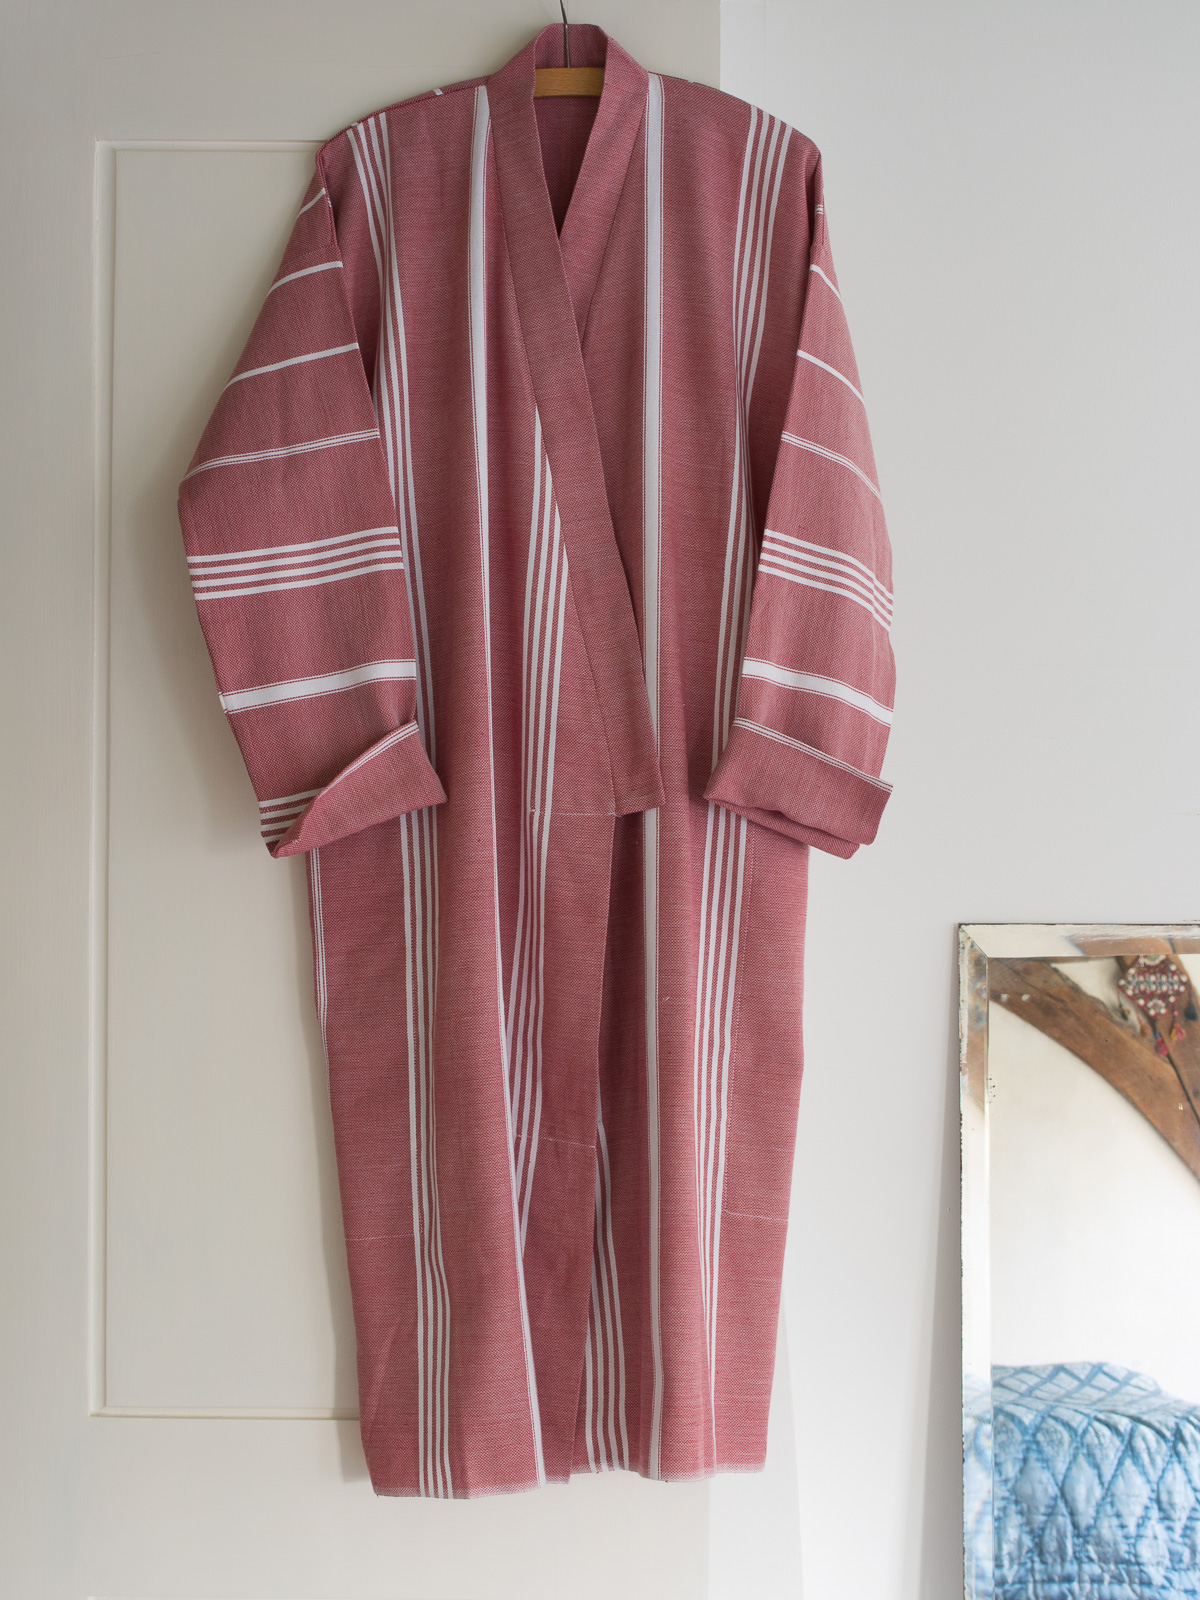 hammam bathrobe size M, burgundy red